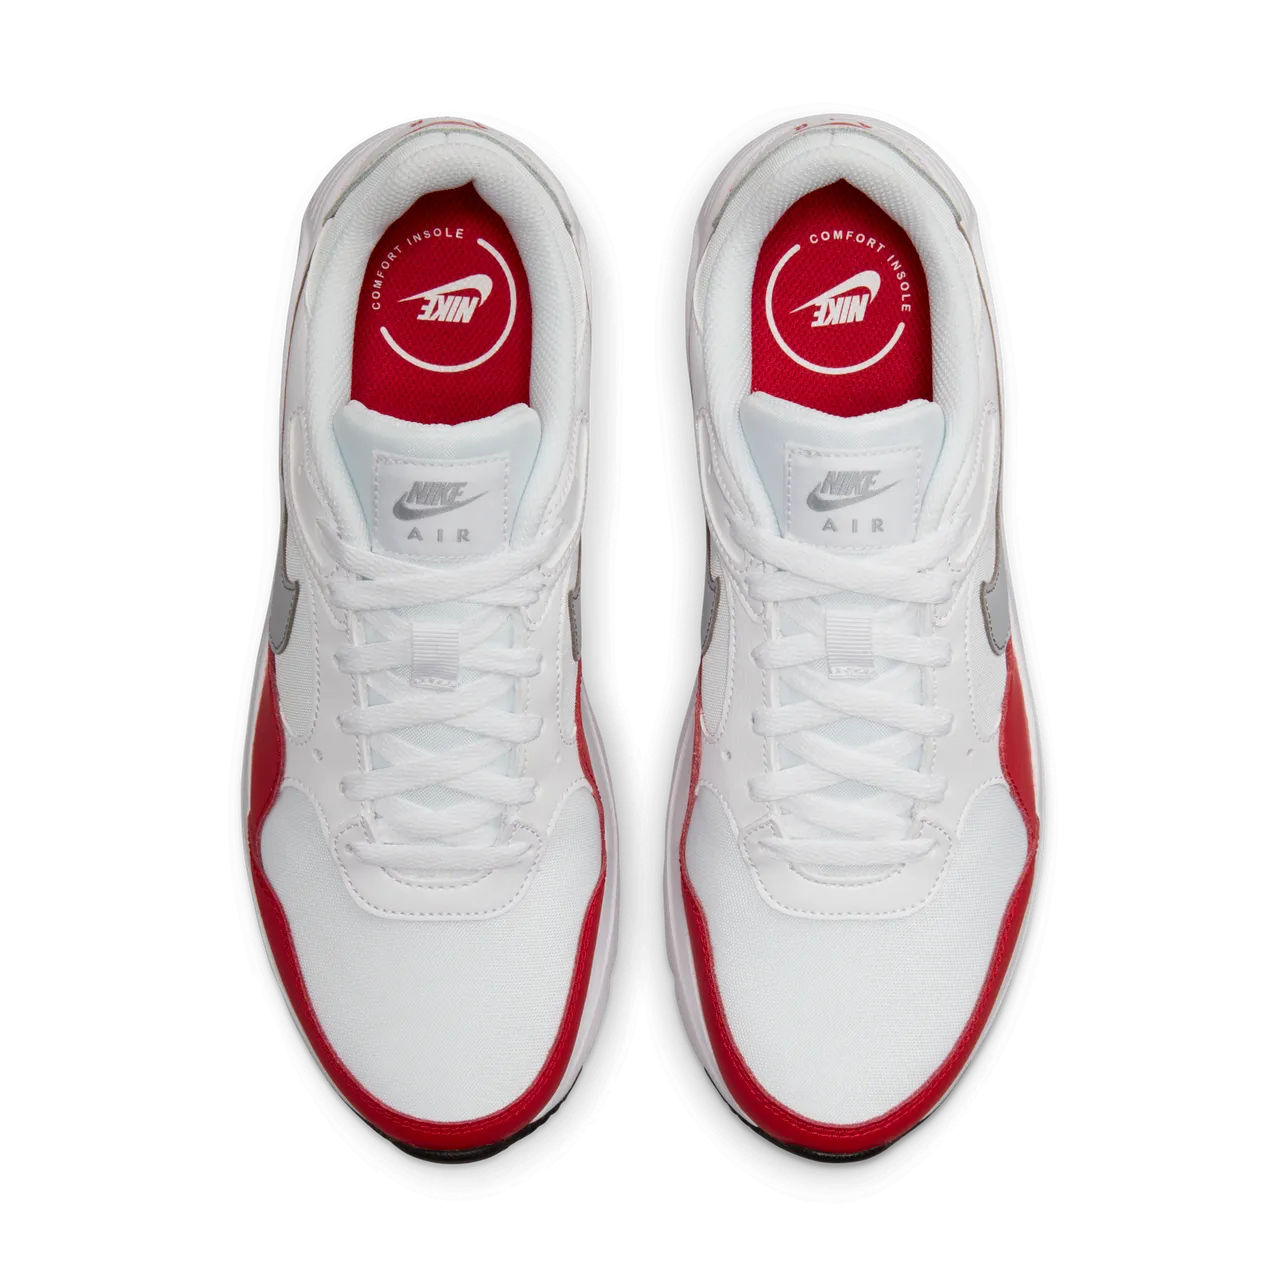 Nike Air Max SC Men's Shoes - White